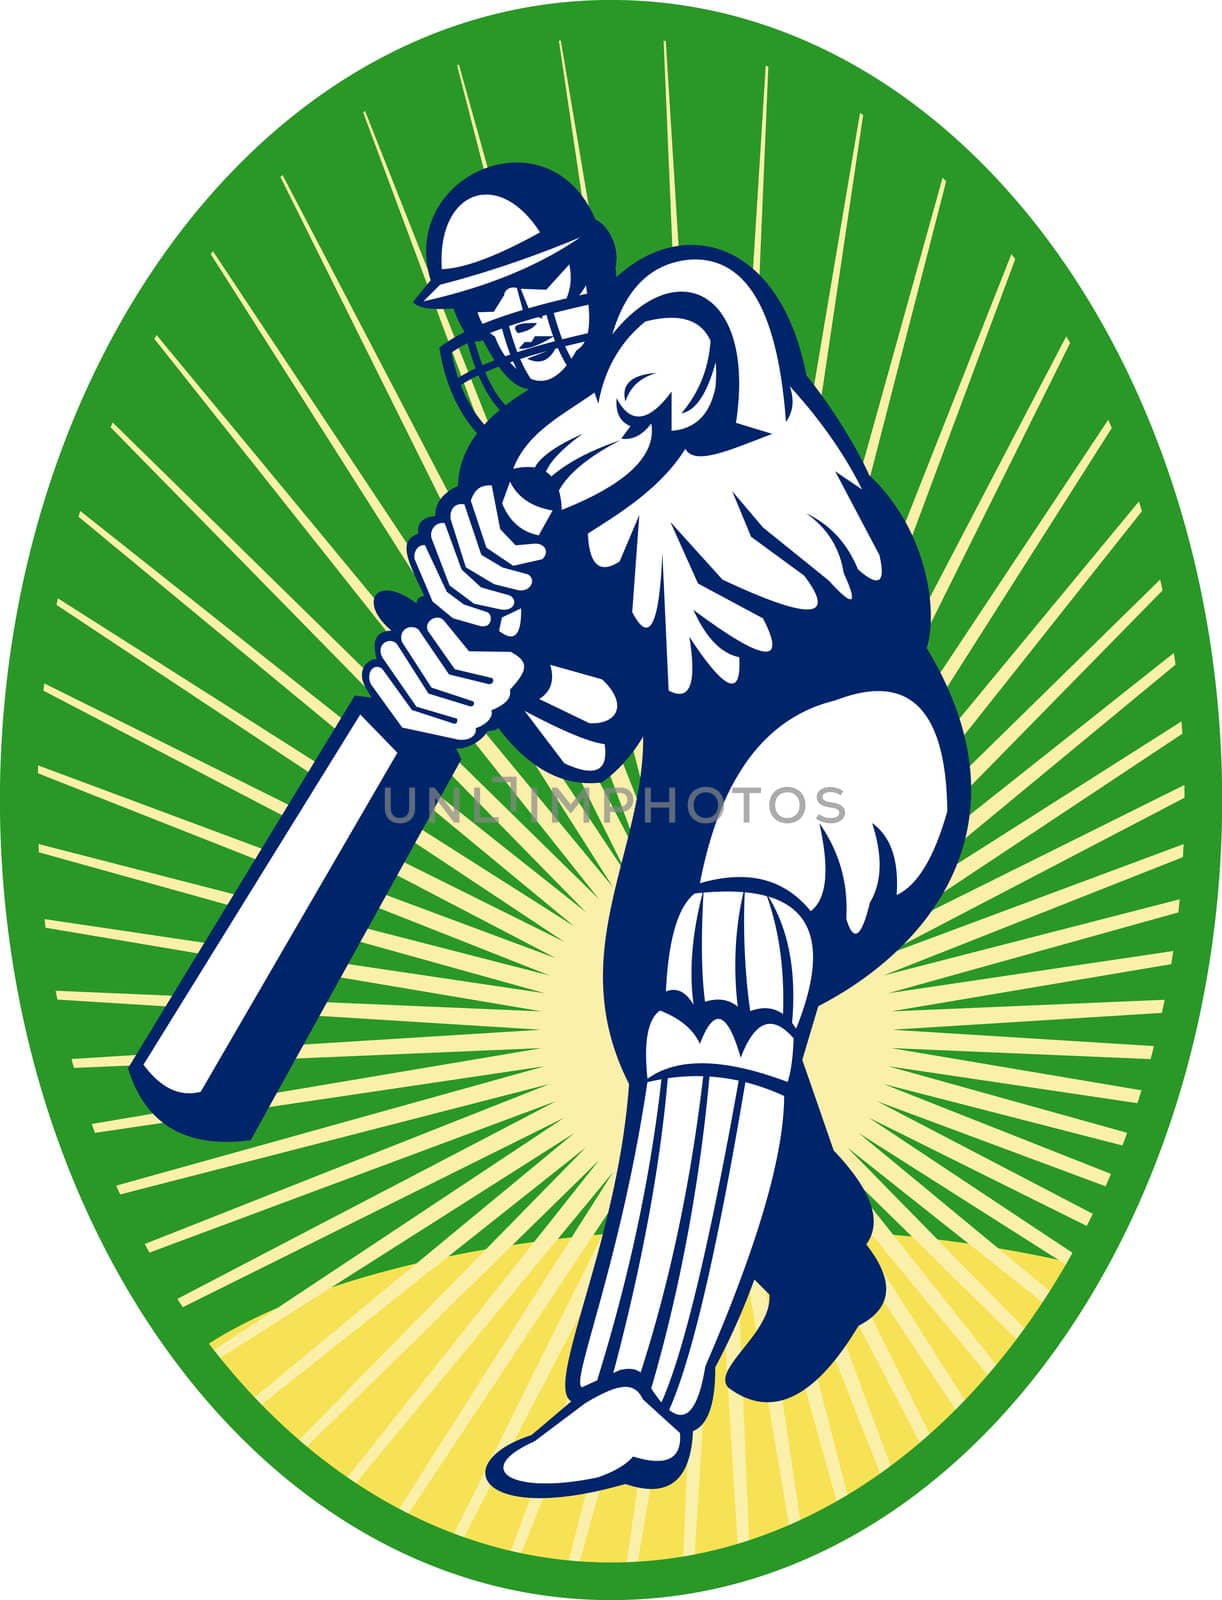 illustration of a cricket batsman silhouette batting front view 